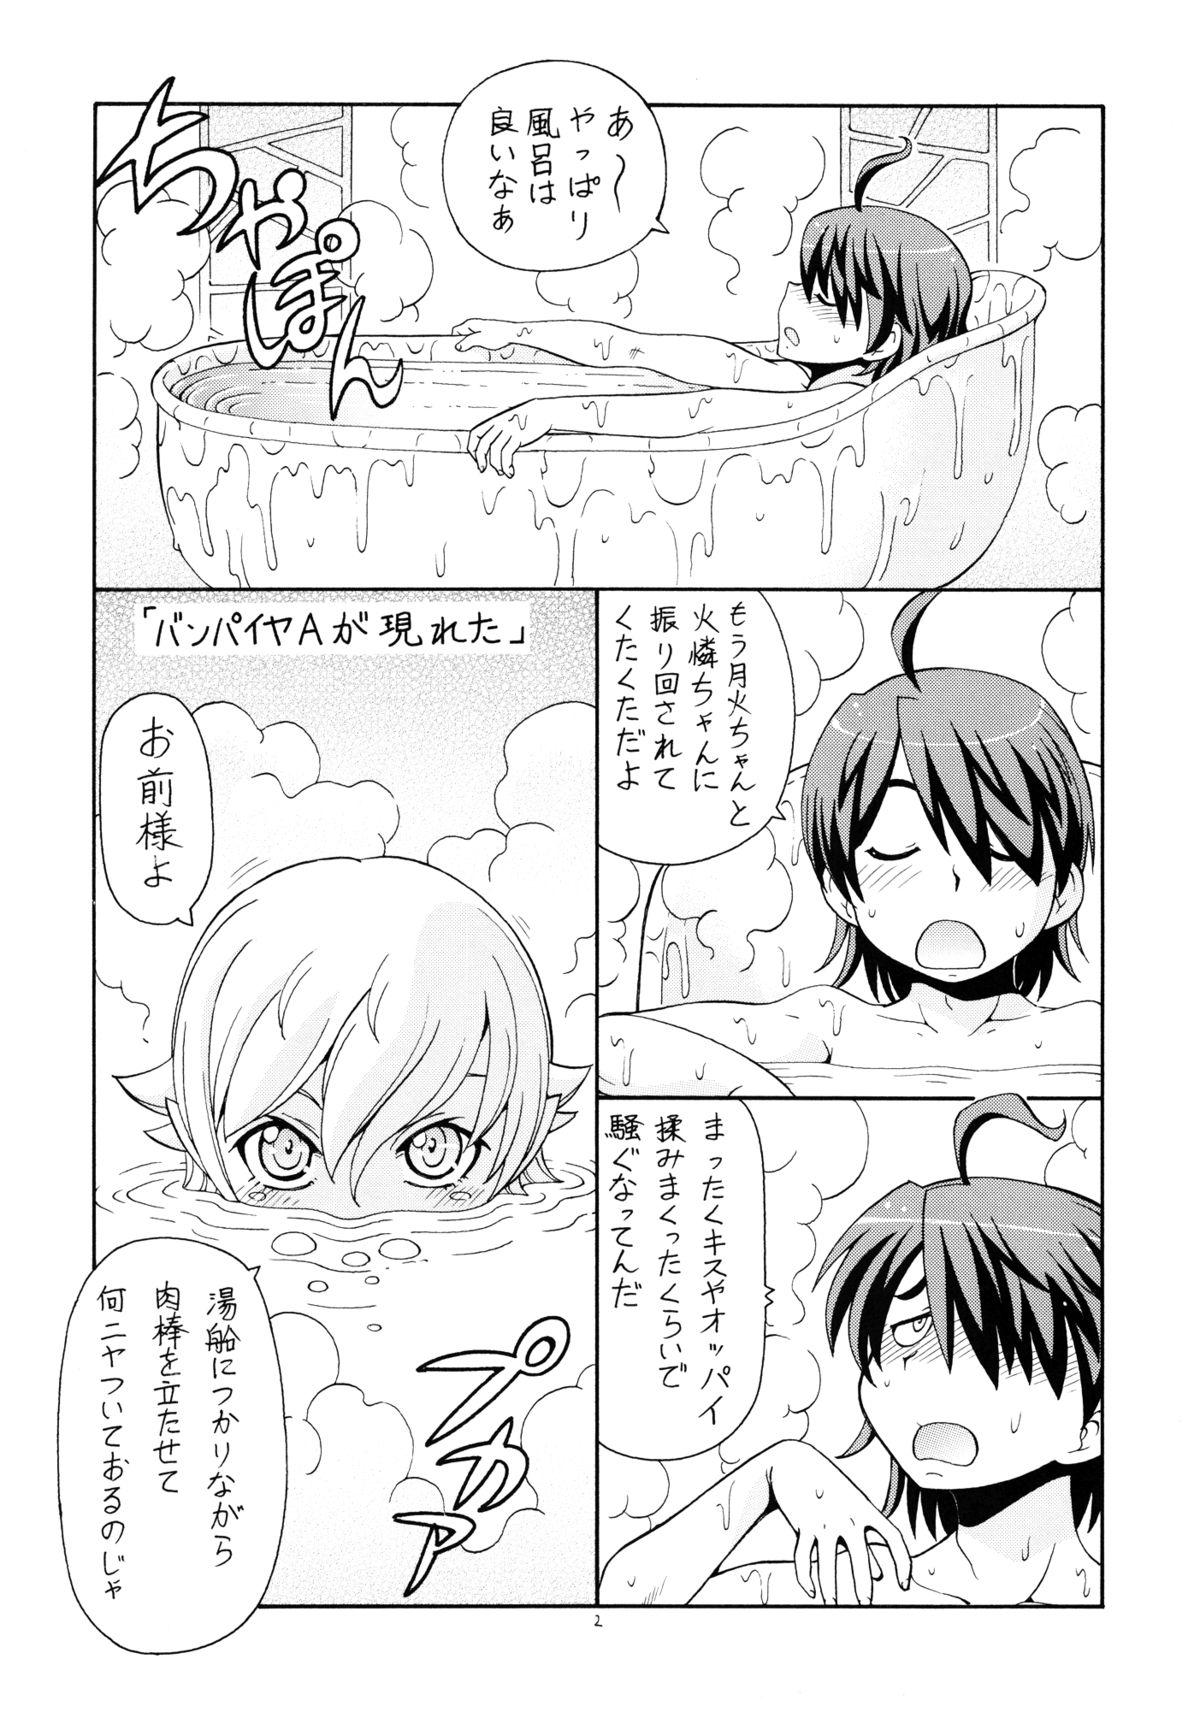 Gaygroup Hito ni Hakanai to Kaite "Araragi" to Yomu 5&6 - Bakemonogatari Car - Page 3